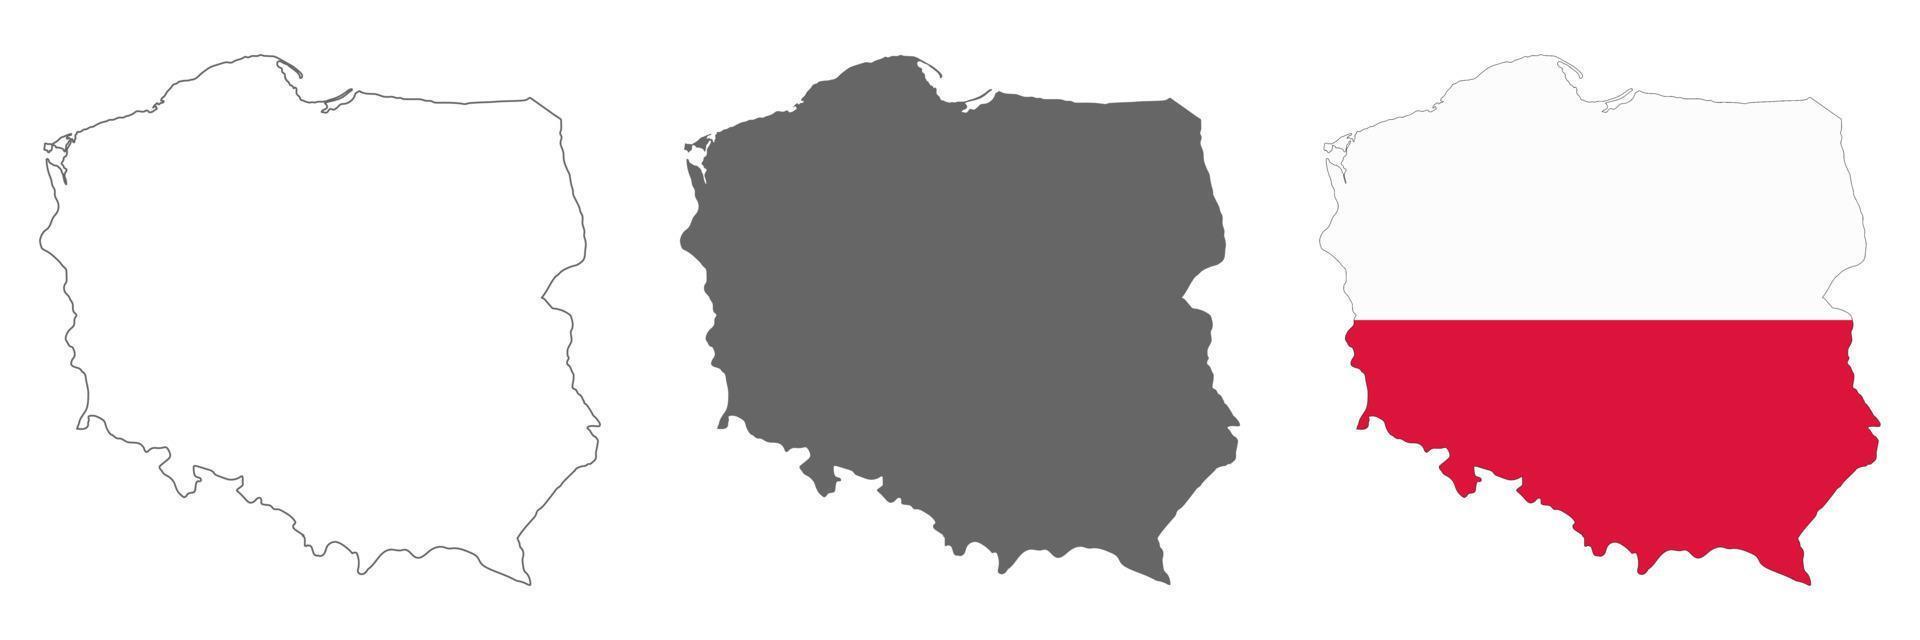 Mapa de Polonia muy detallado con bordes aislados en segundo plano. vector